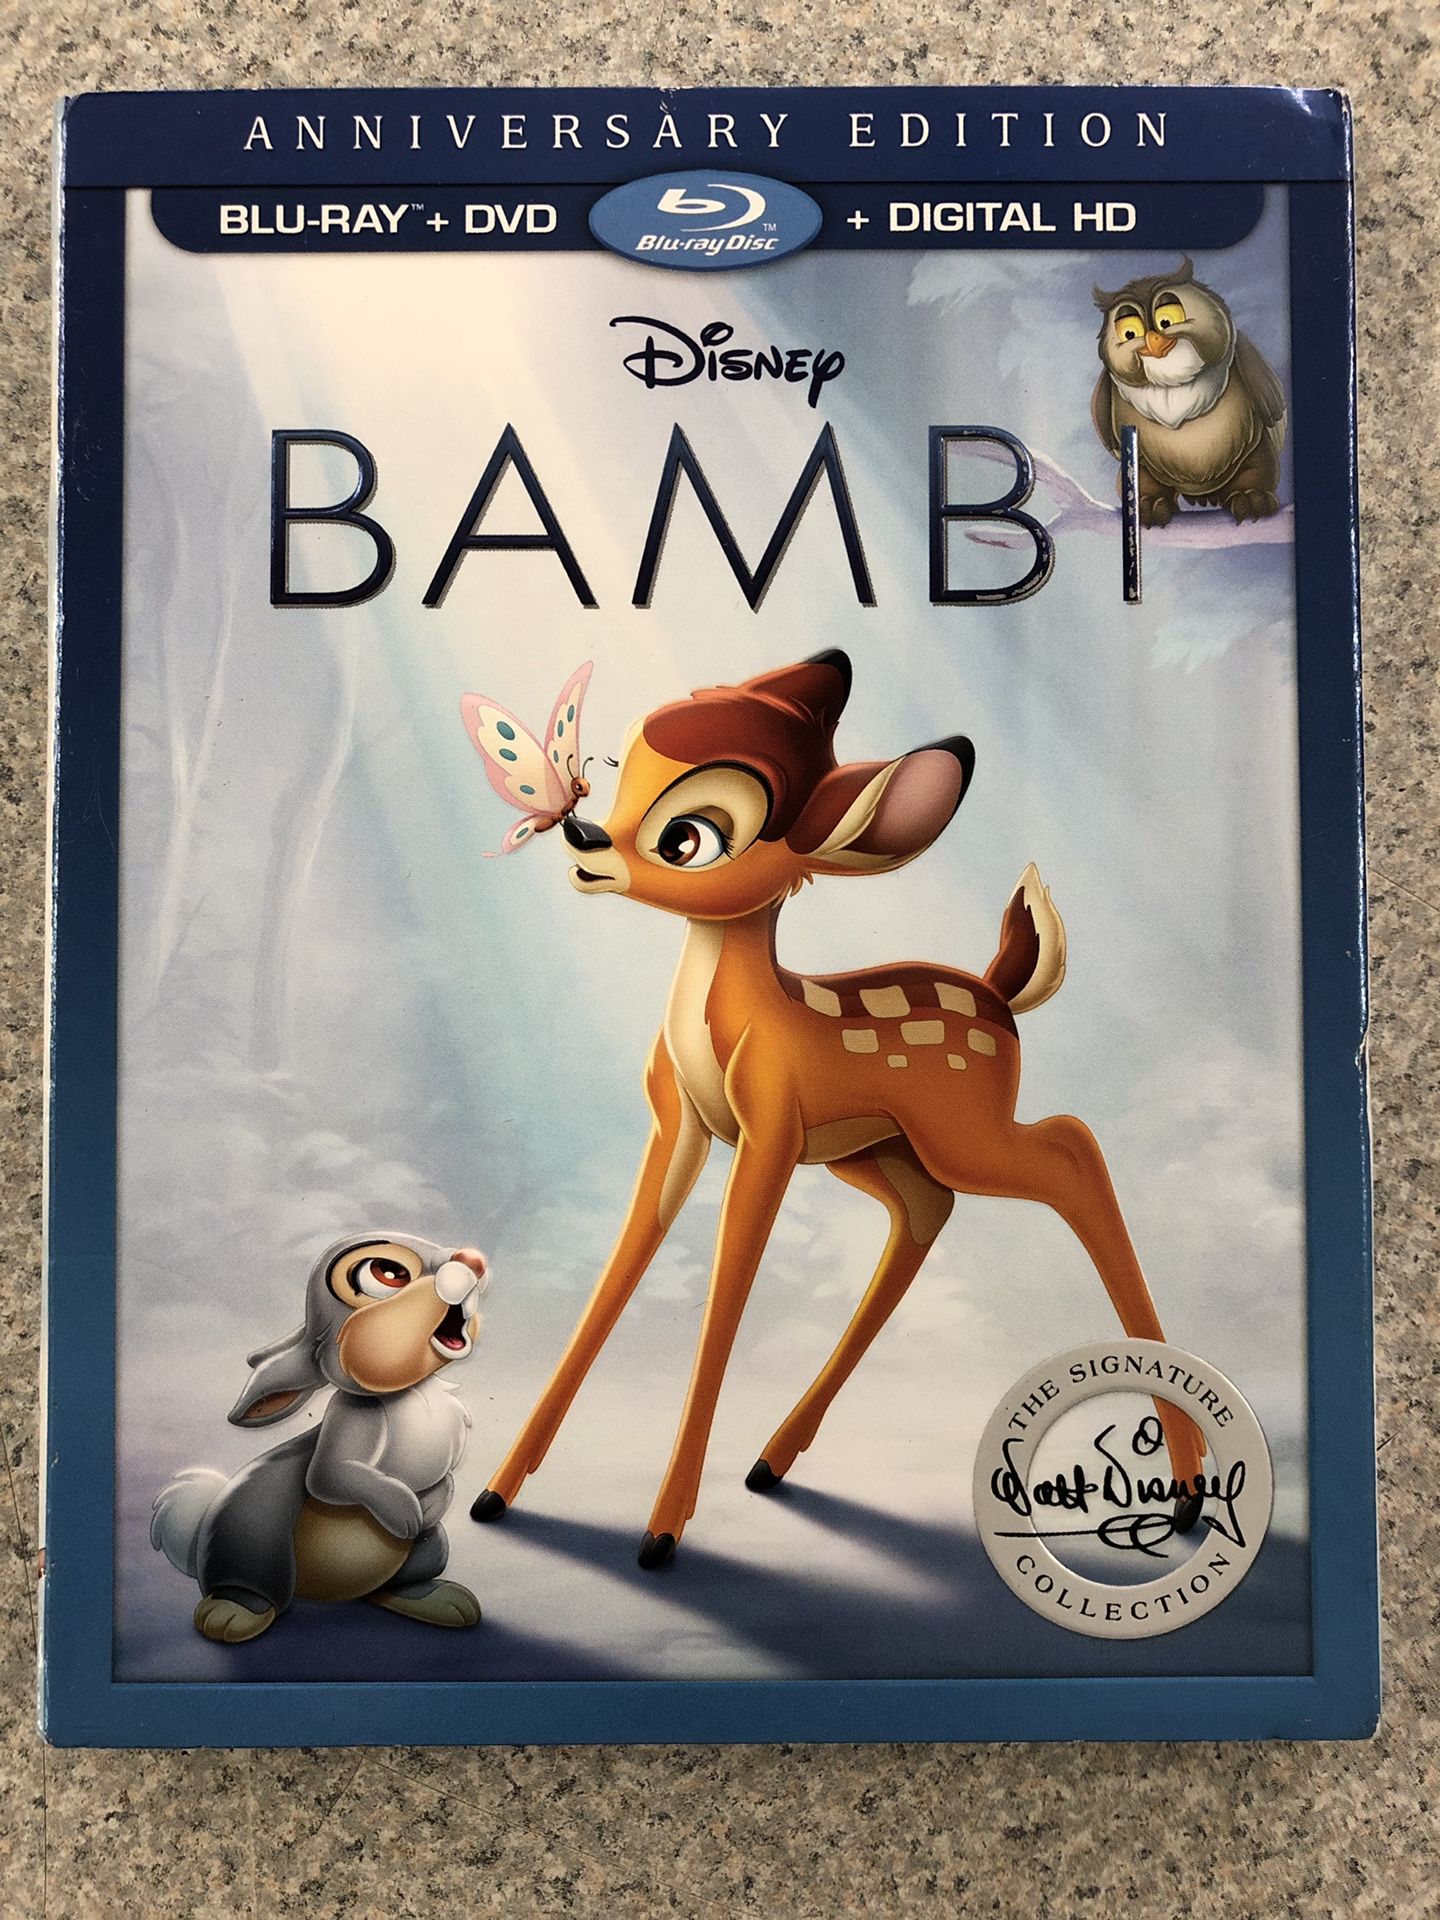 Disney’s Bambi Blu-ray DVD + Digital HD